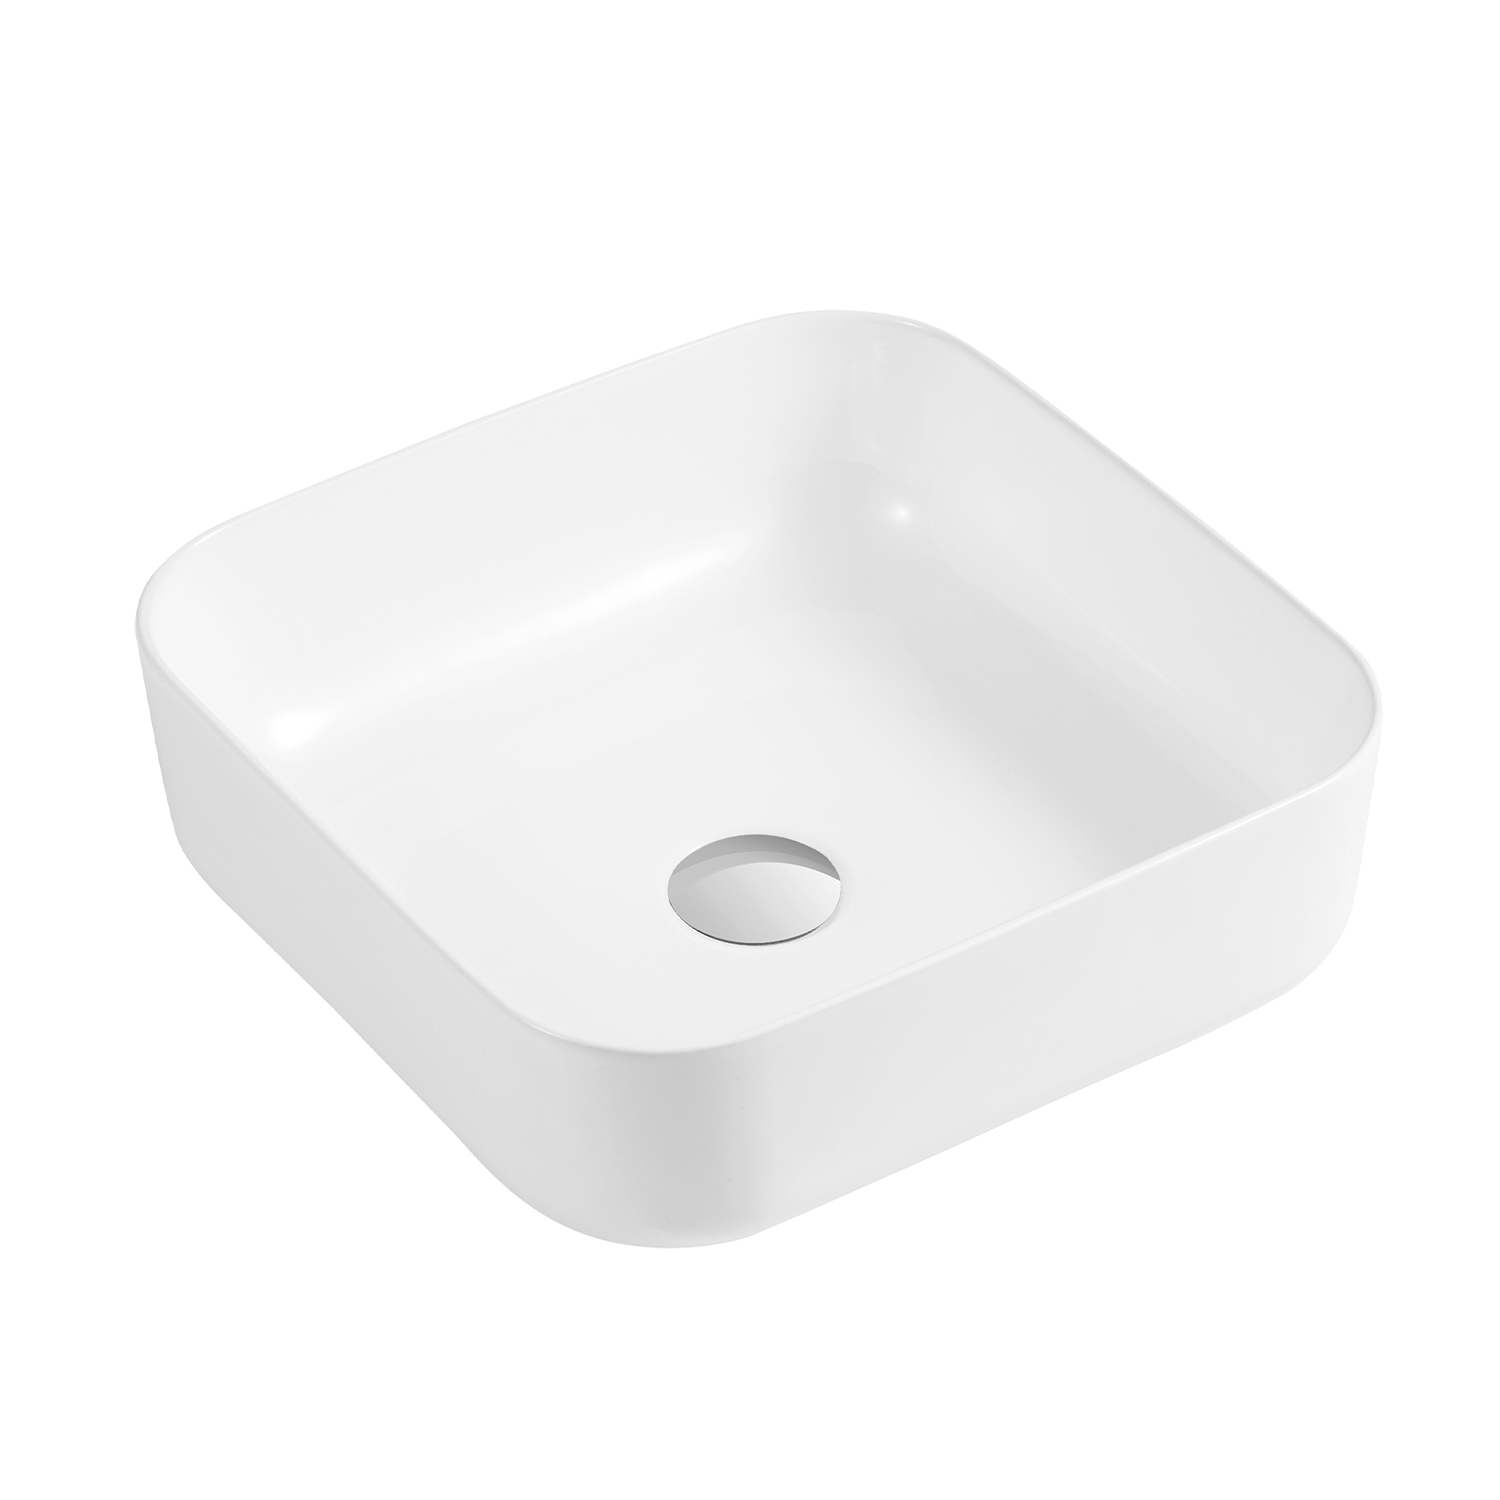 DAX  Ceramic Square Bathroom Vessel Basin White Glossy - (15" x 15") (DAX-CL1282-WG)